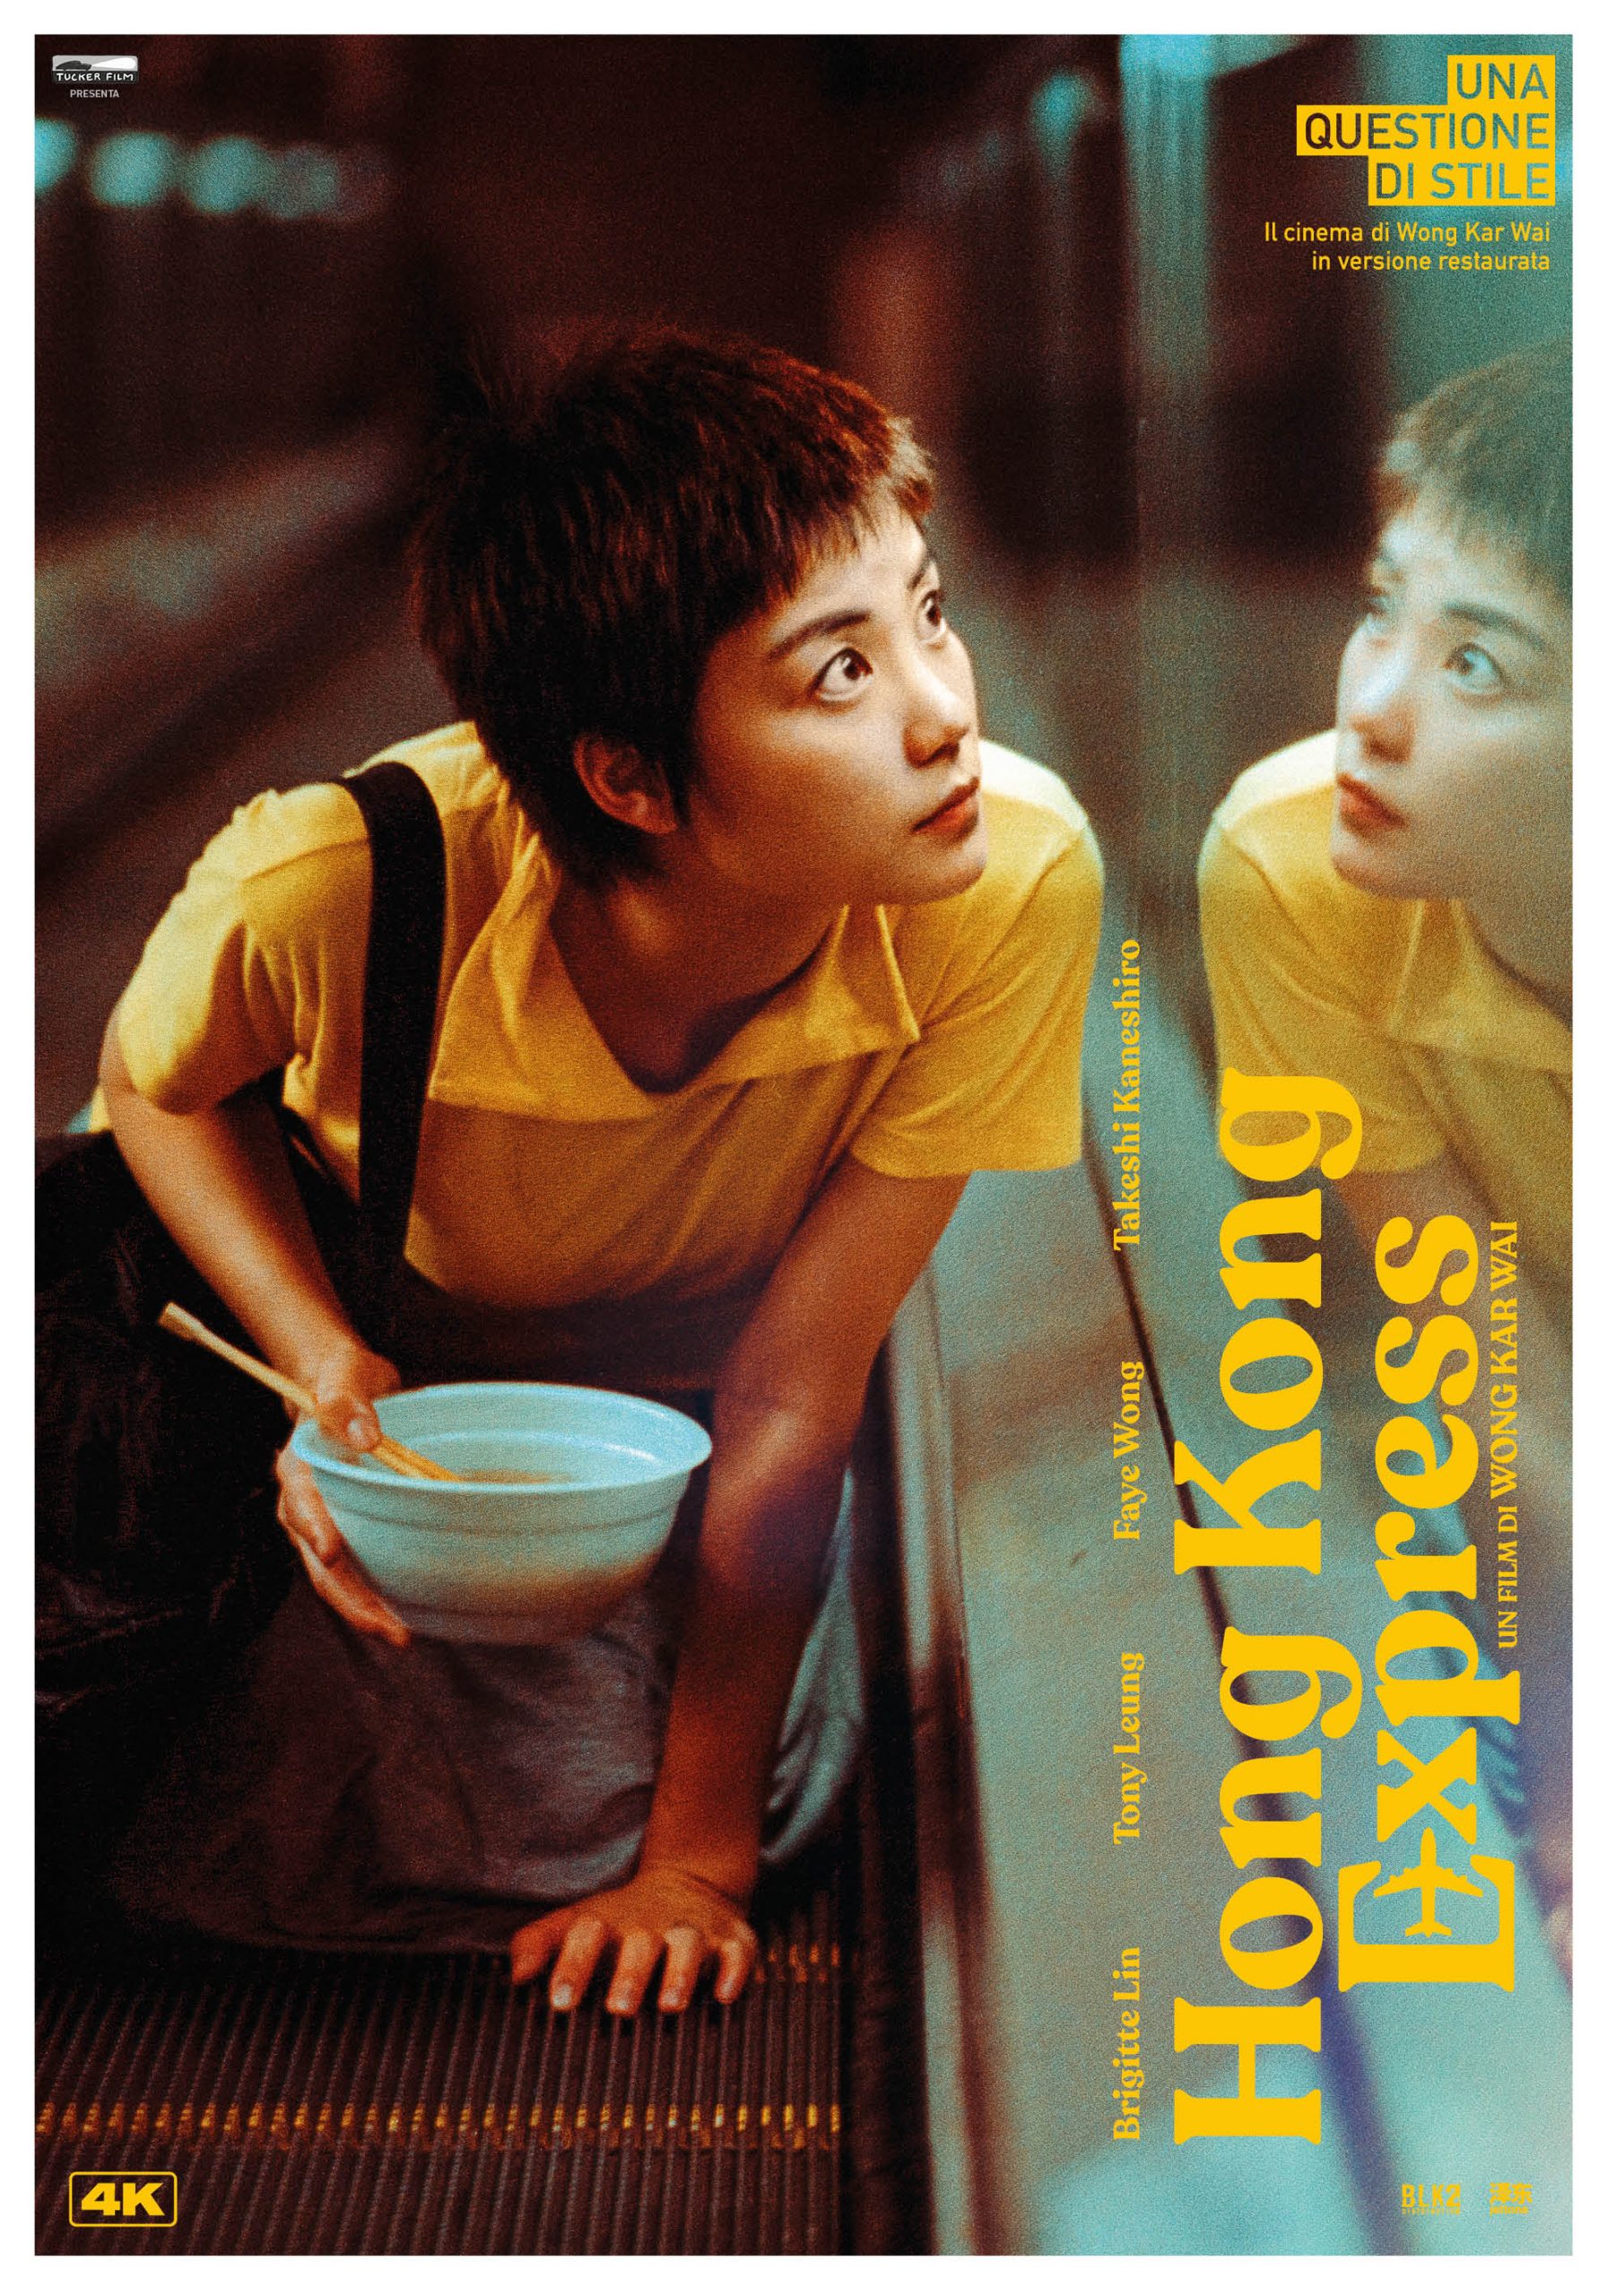 Locandina del film Hong Kong Express